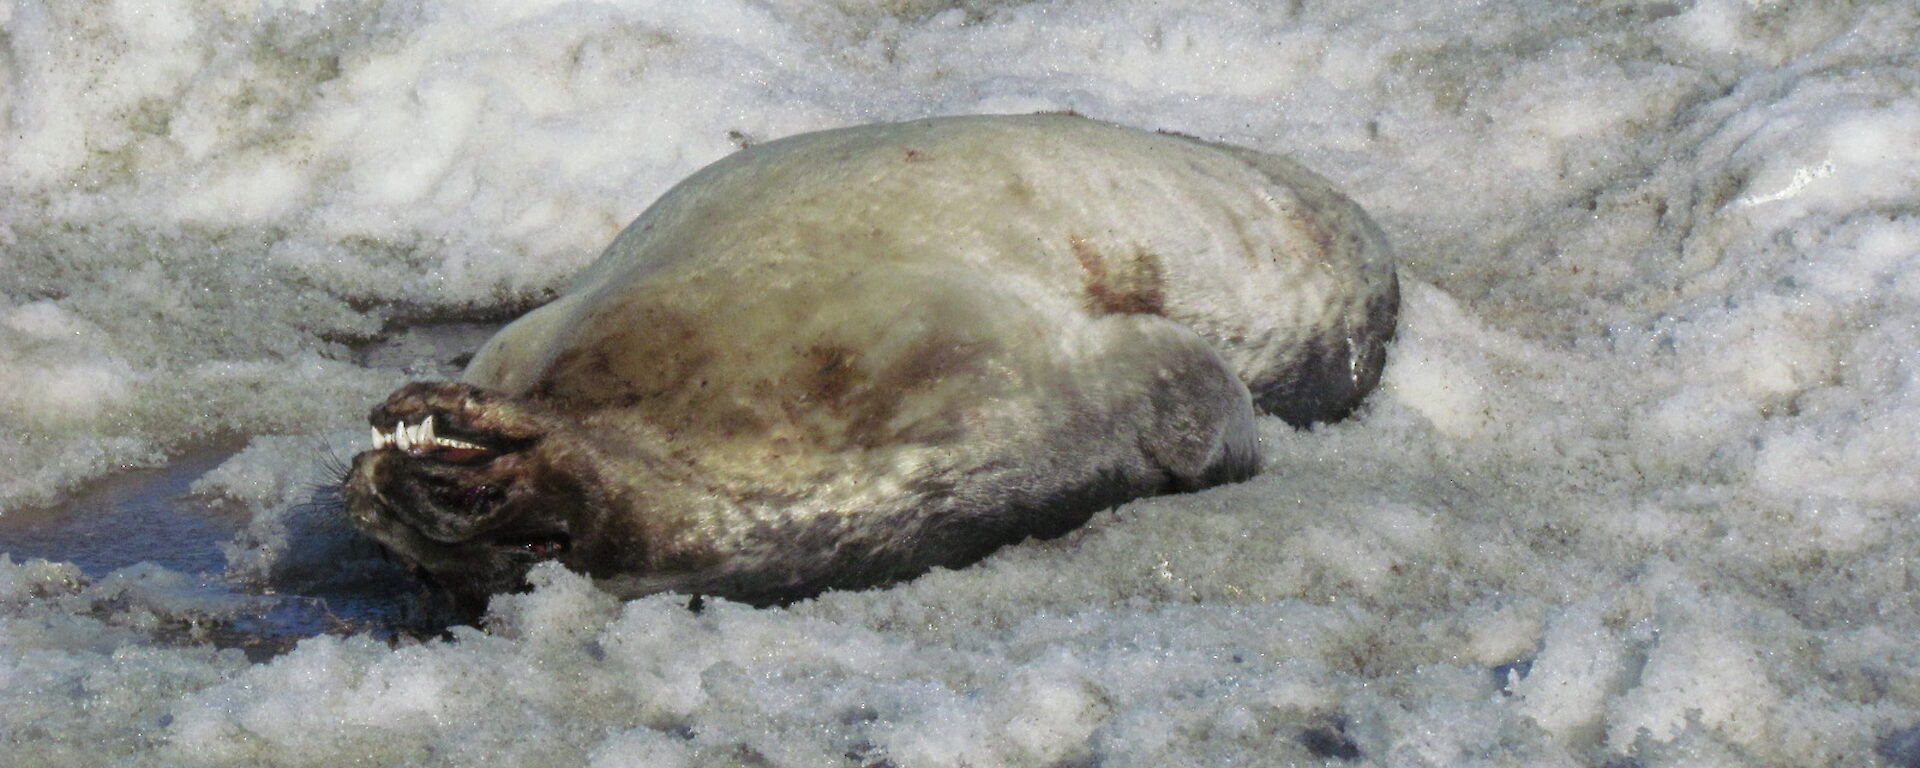 Dead Weddell seal near Gardner Island